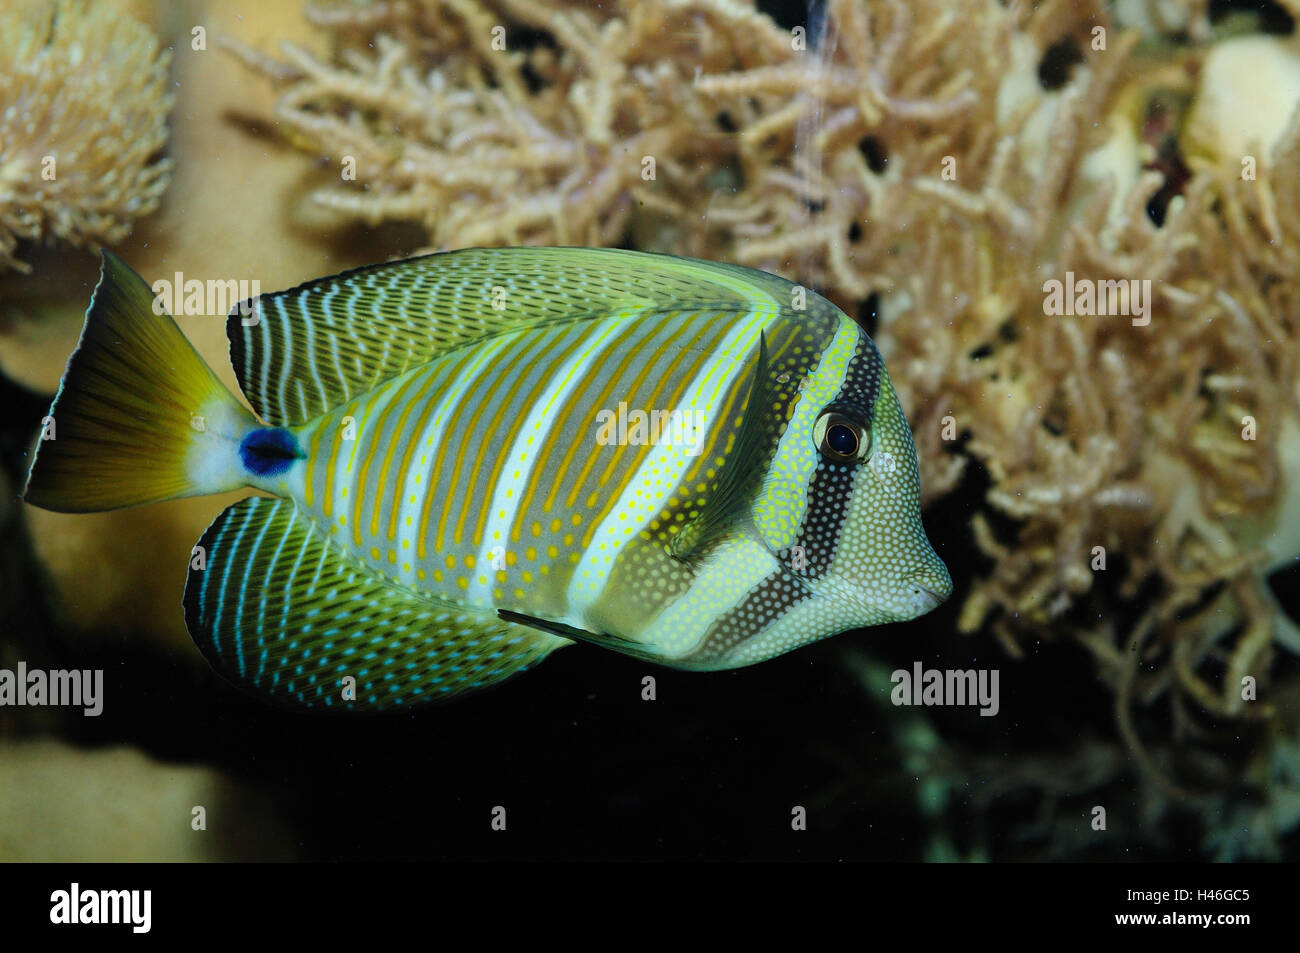 Sailfin tang, zebrasoma veliferum, underwater, front view, swimming, Stock Photo